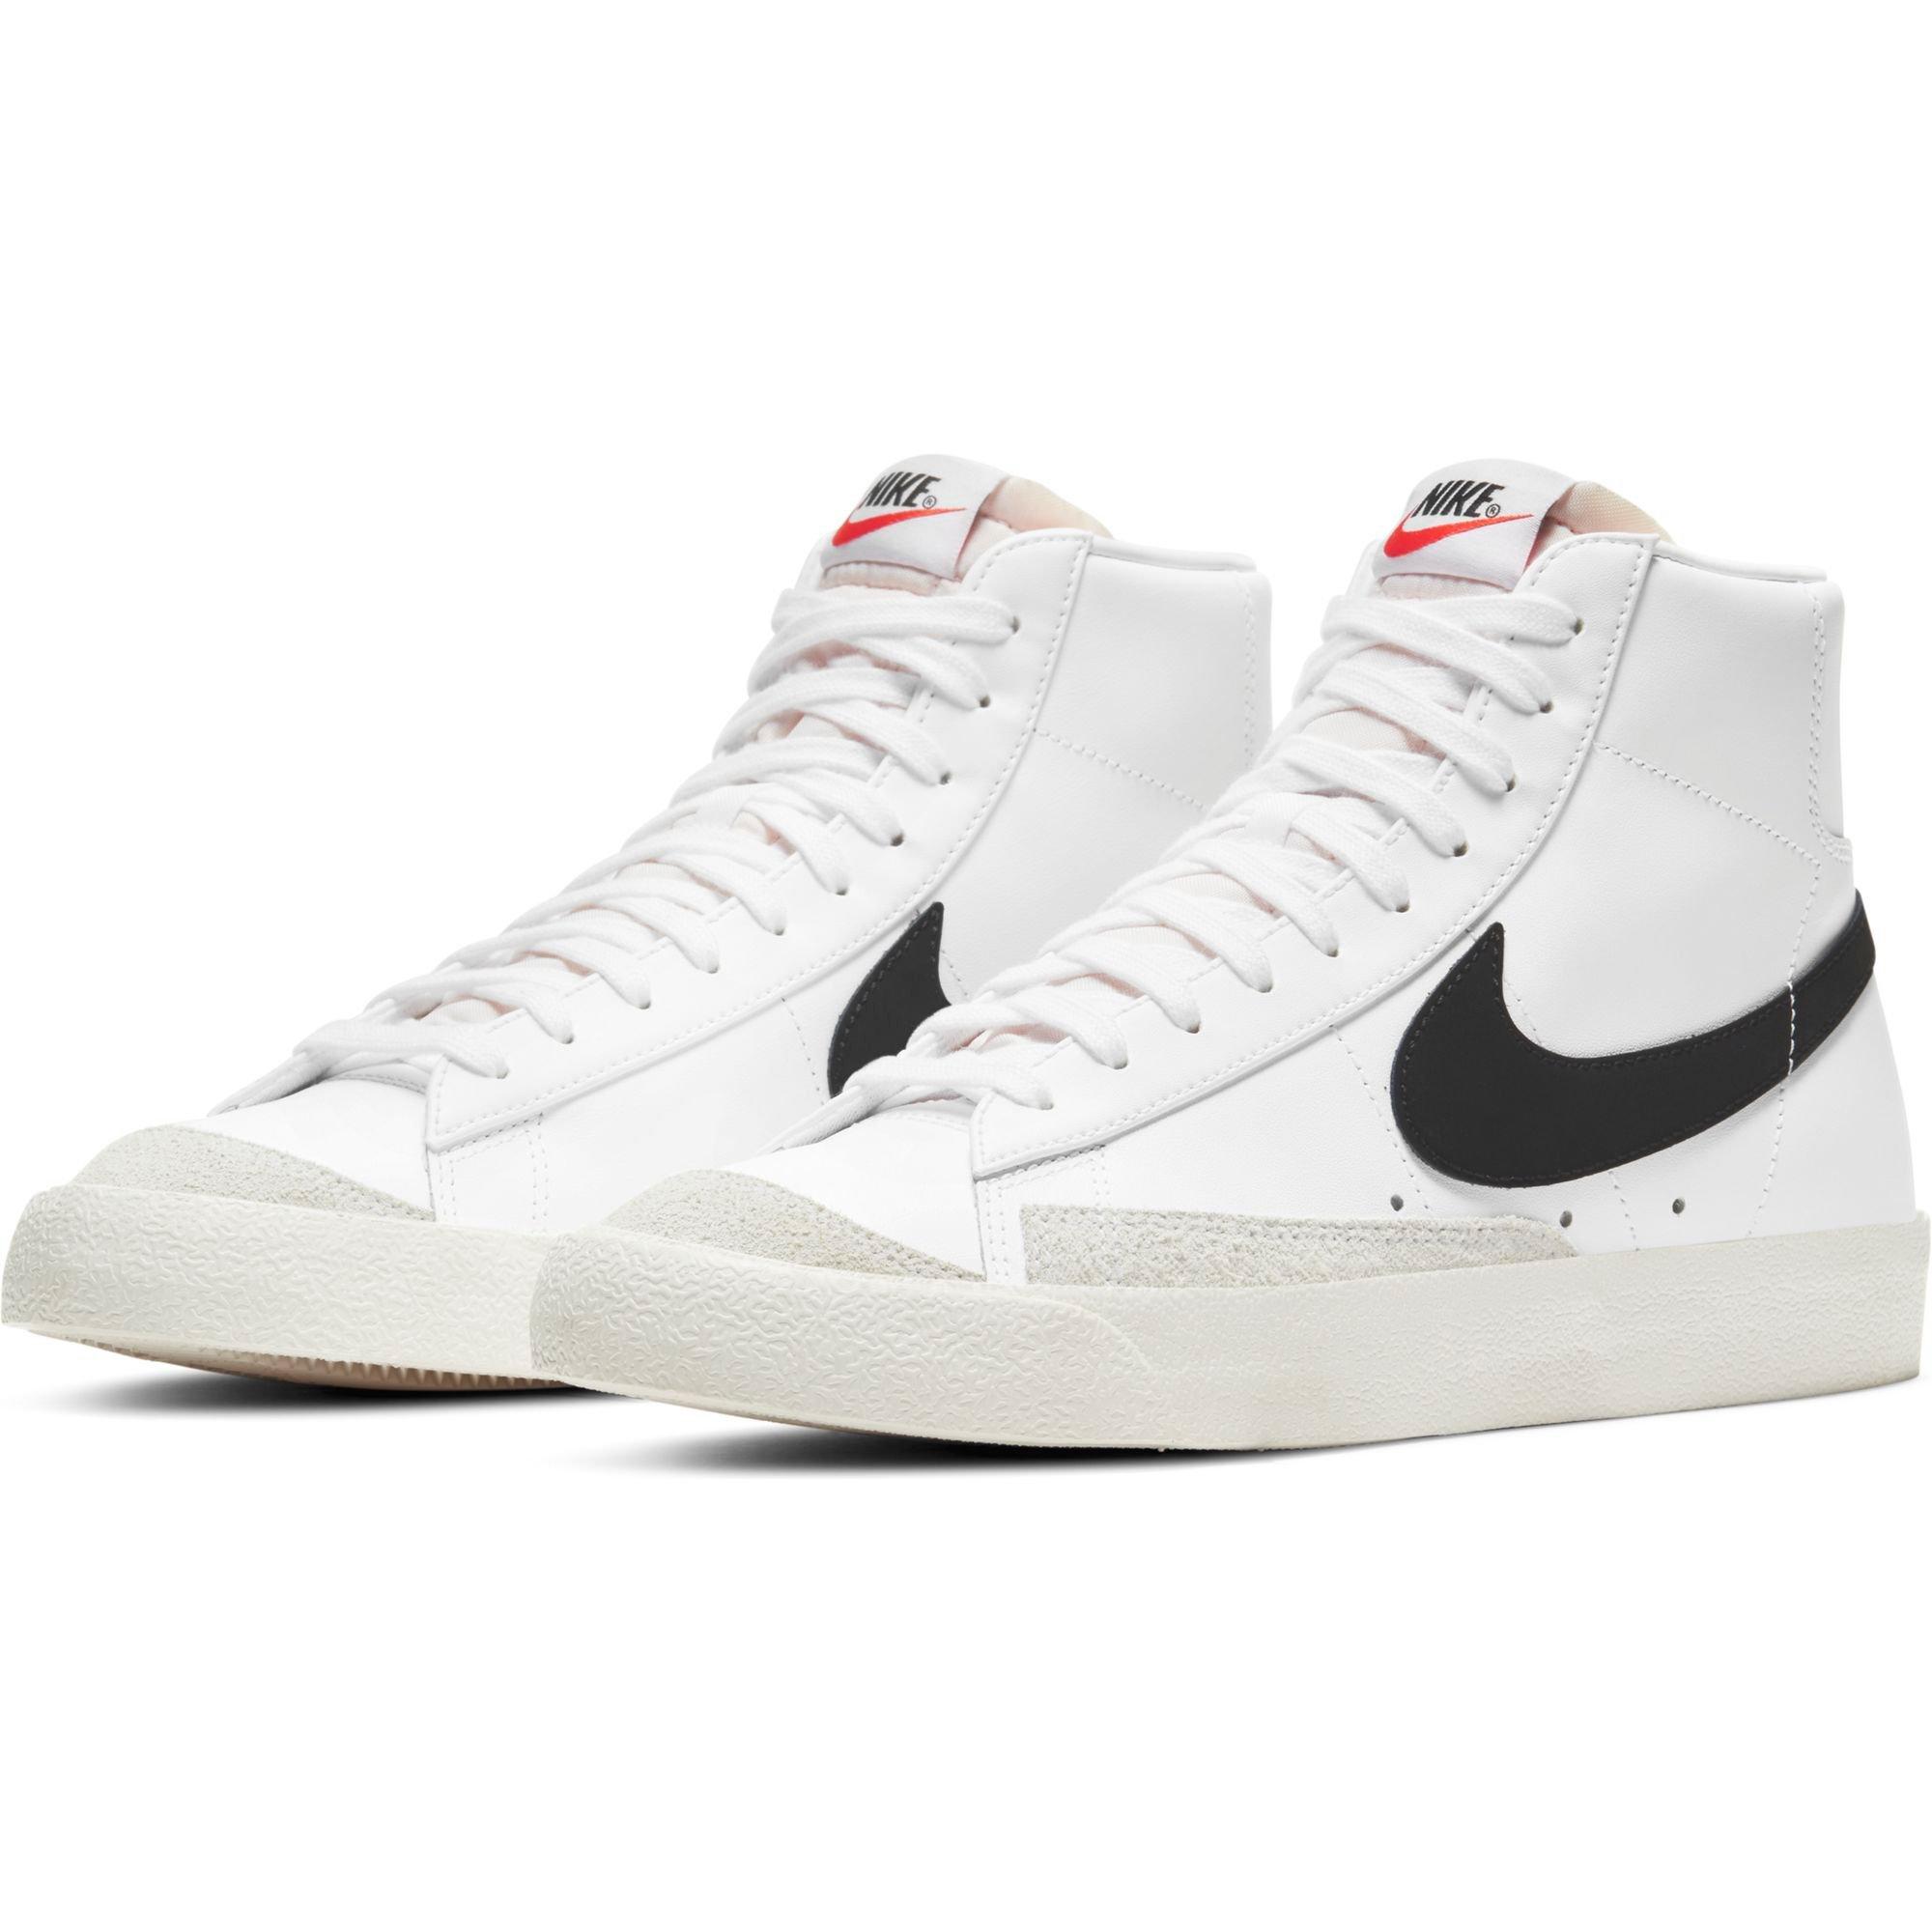 Nike Blazer Mid "White/Black" Shoe